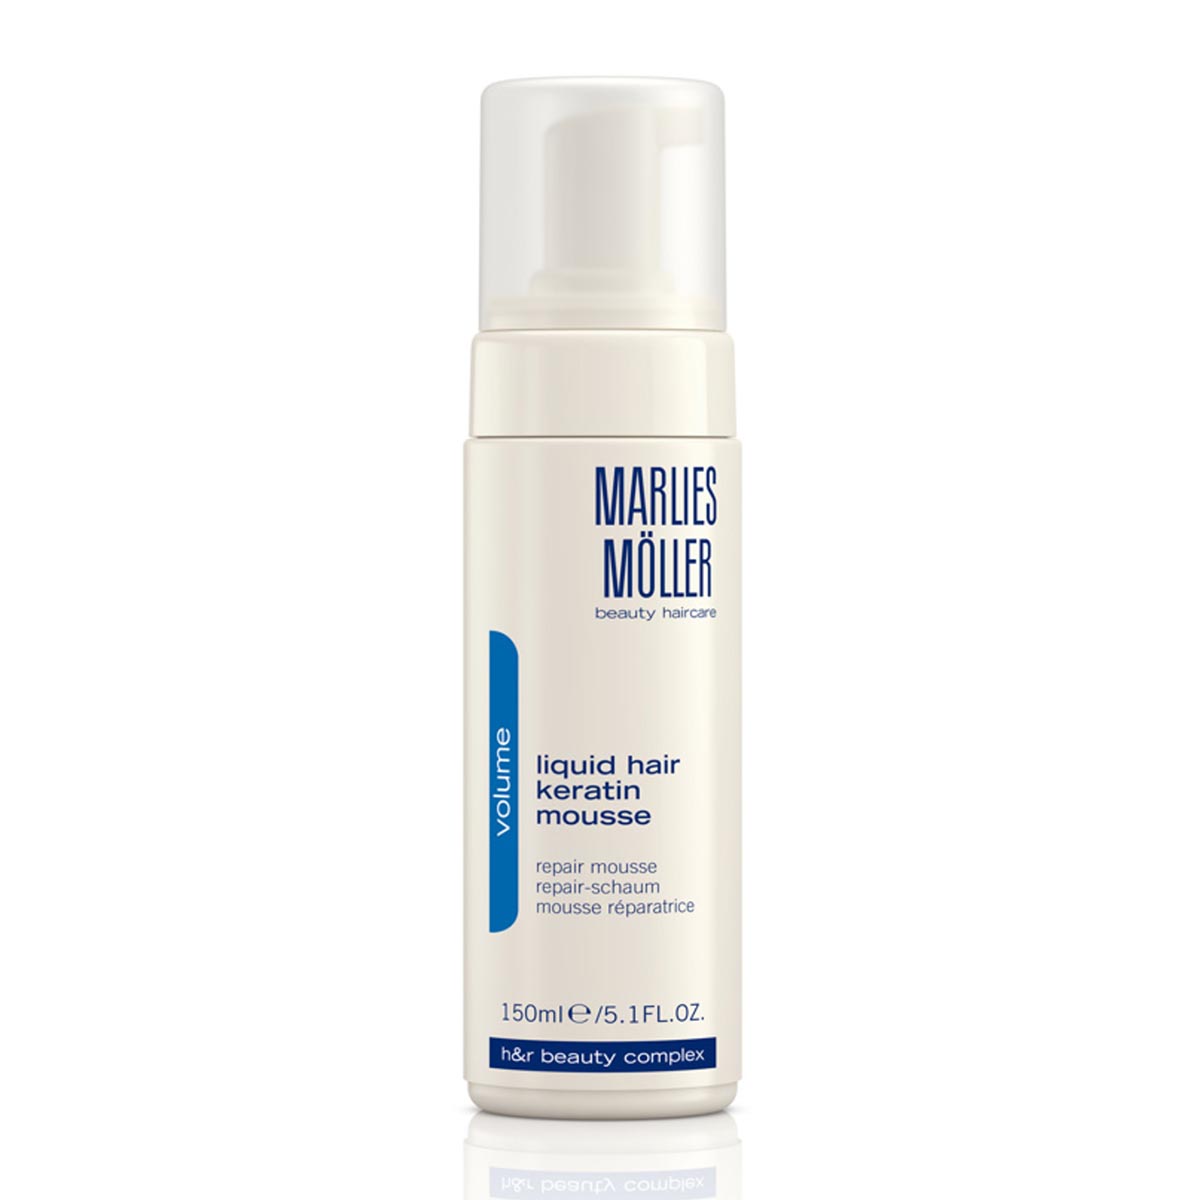 Image of Marlies Moller Volume Liquid Hair Keratin Mousse 150ml